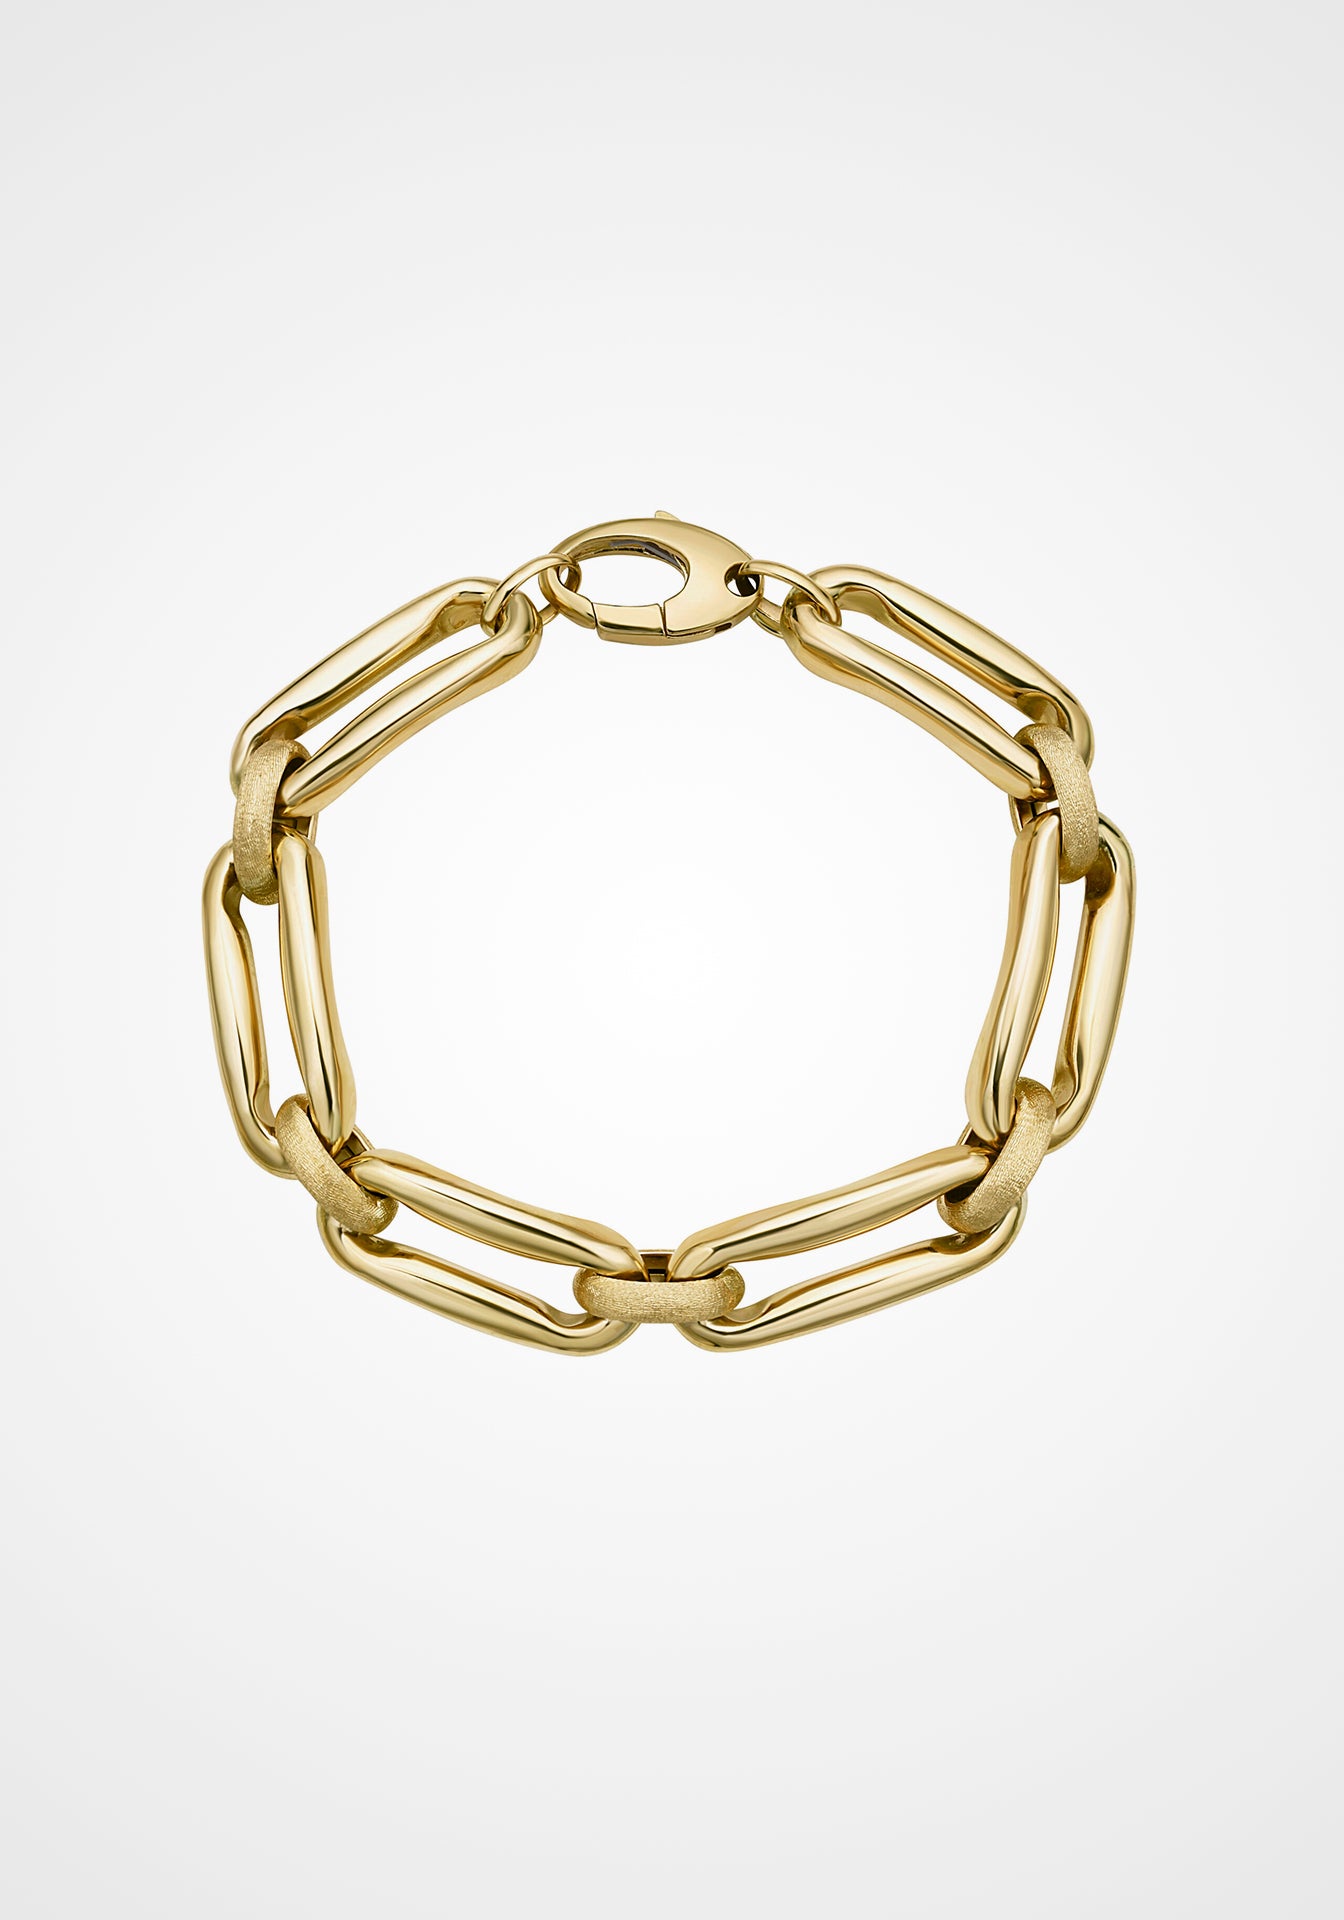 Milano Flat Pinched Link, 14K Yellow Gold Bracelet